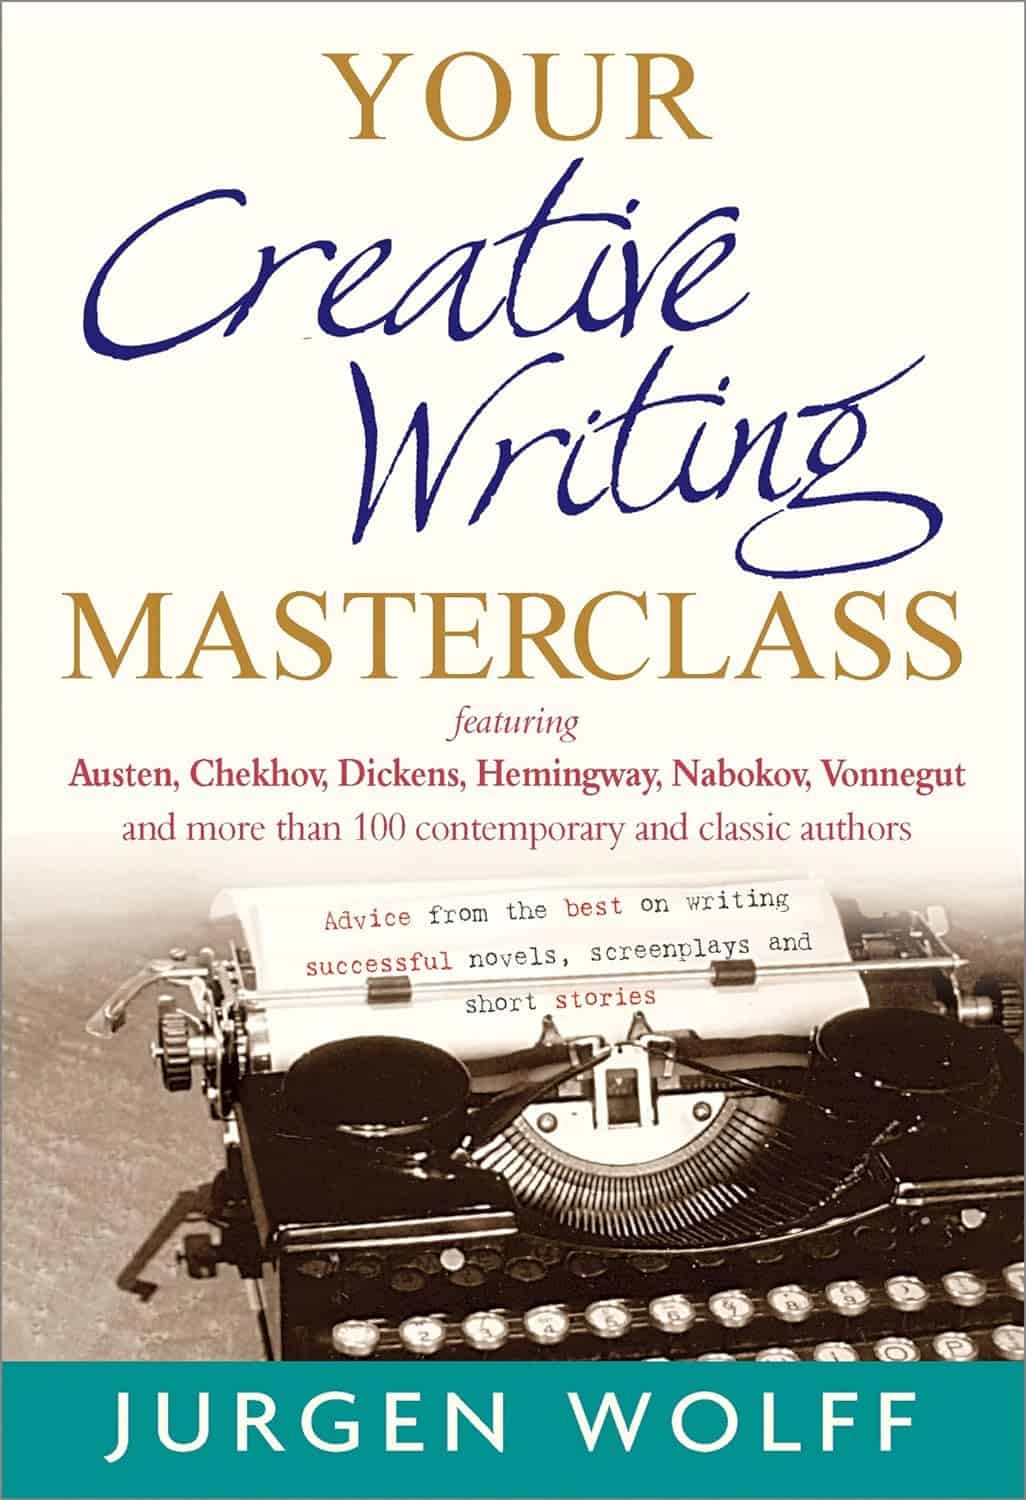 Jurgen Wolff "Your Creative Writing Masterclass"